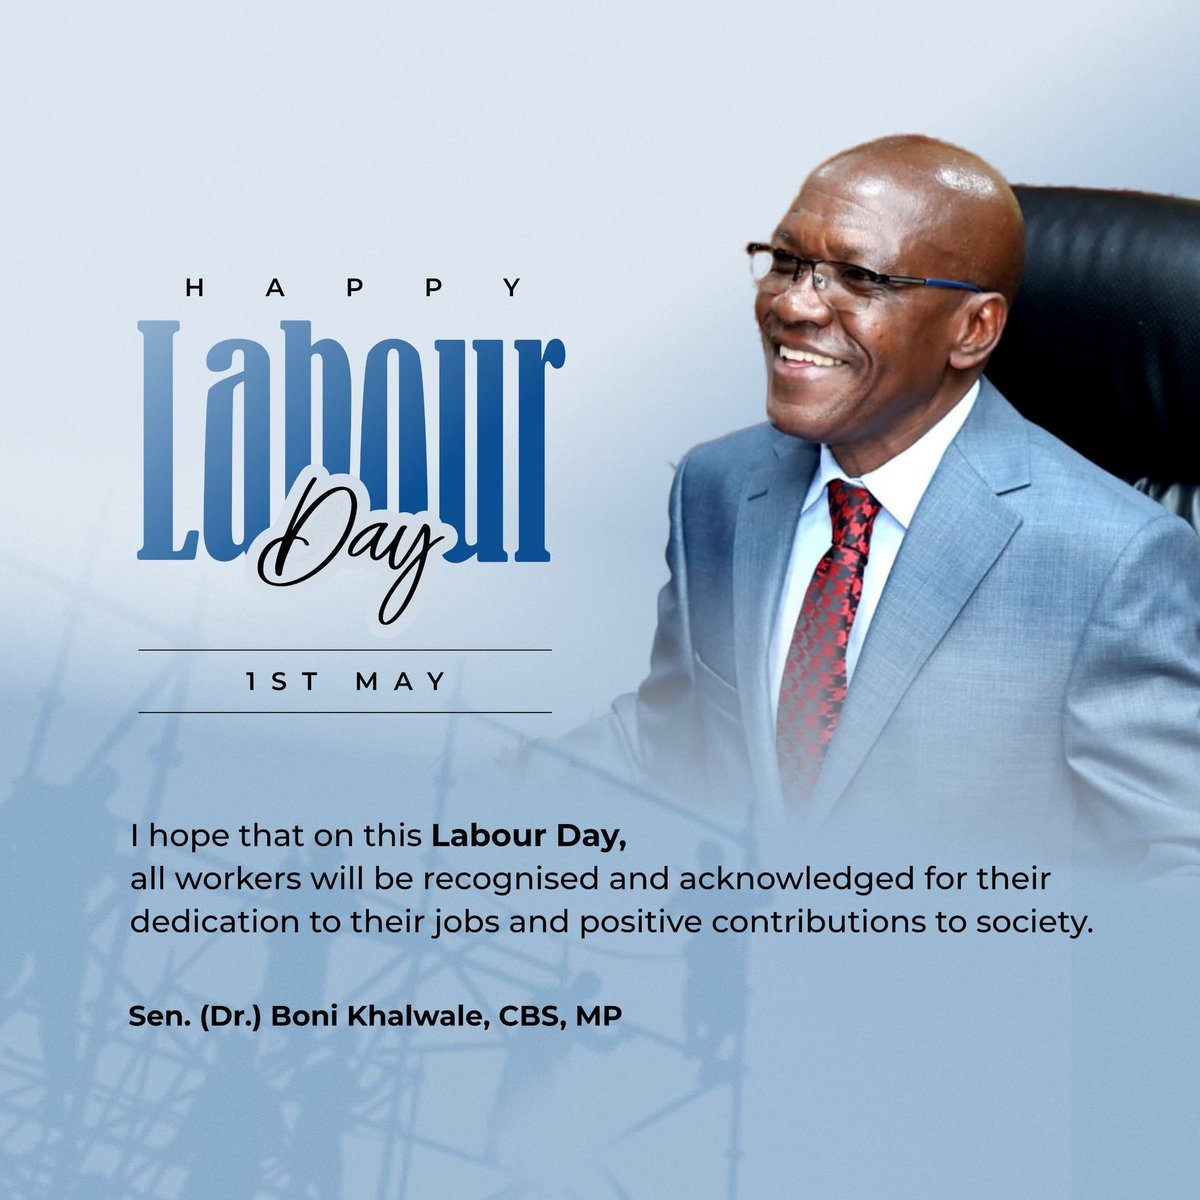 Heshimu kazi. Happy Labour Day, dear Kenyans. Whatever, ua hustle.